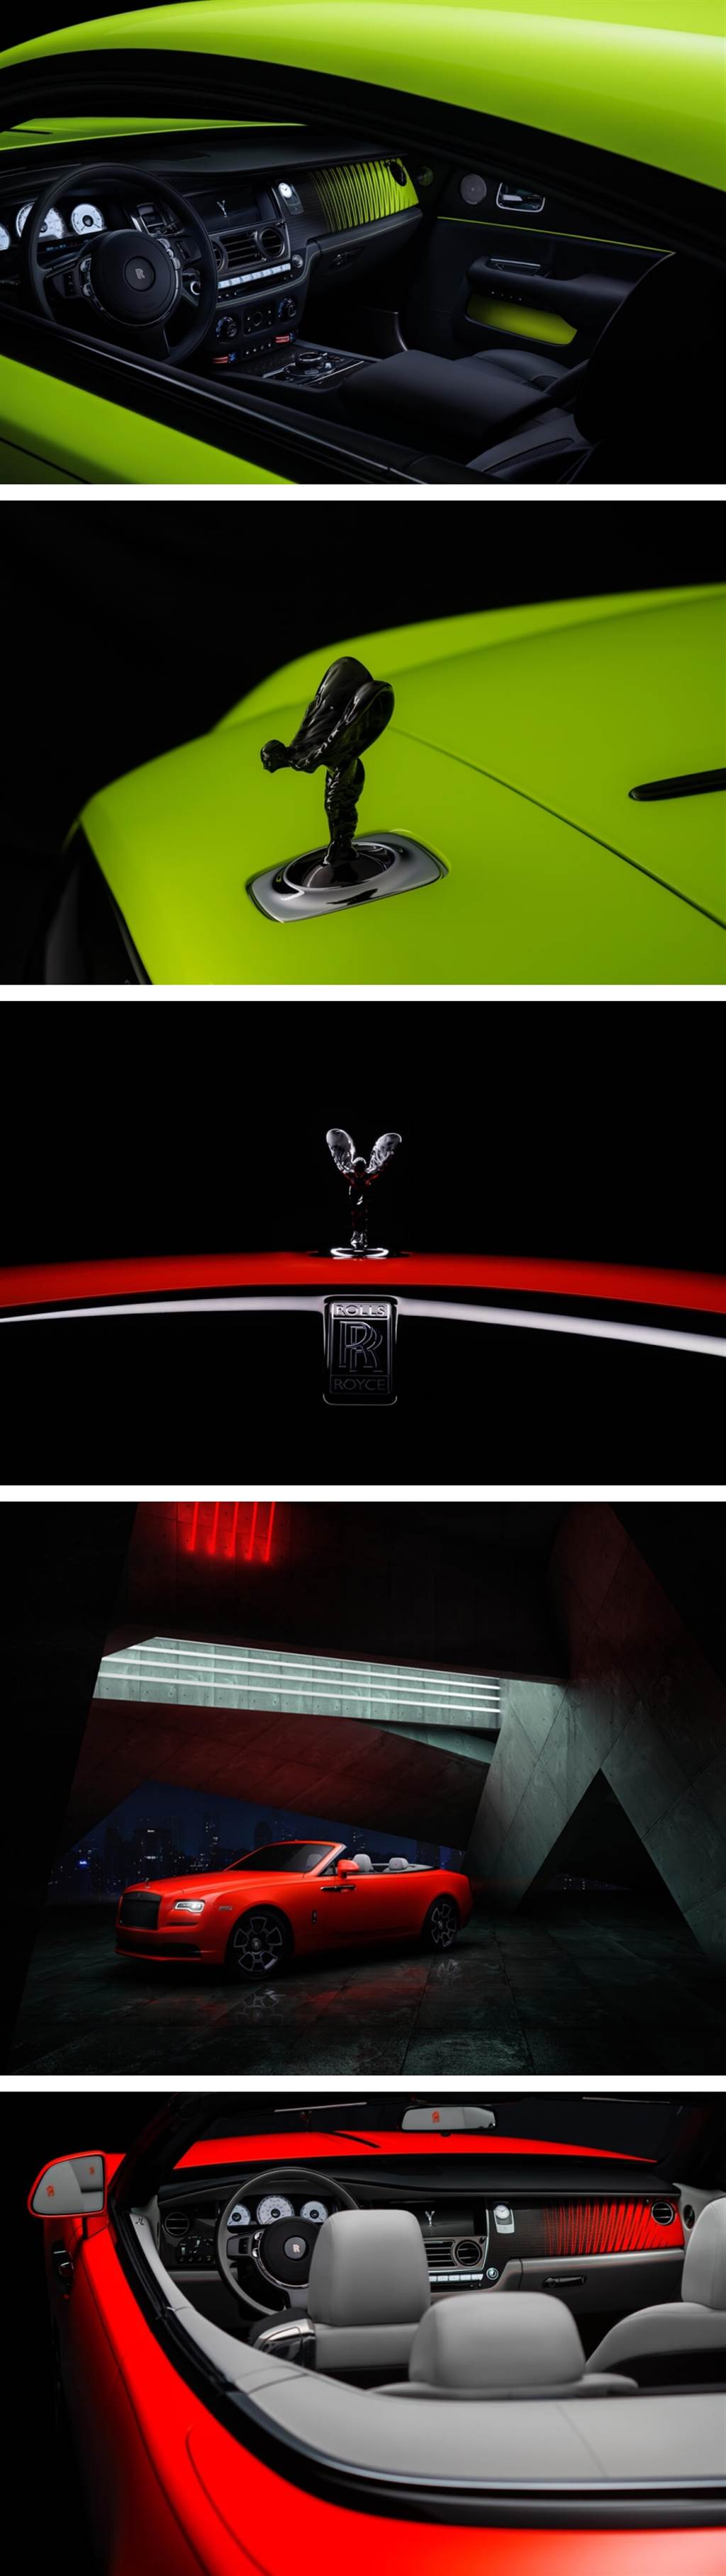 Rolls-Royce以「霓虹燈之夜」三色漆點亮了Black Badge系列